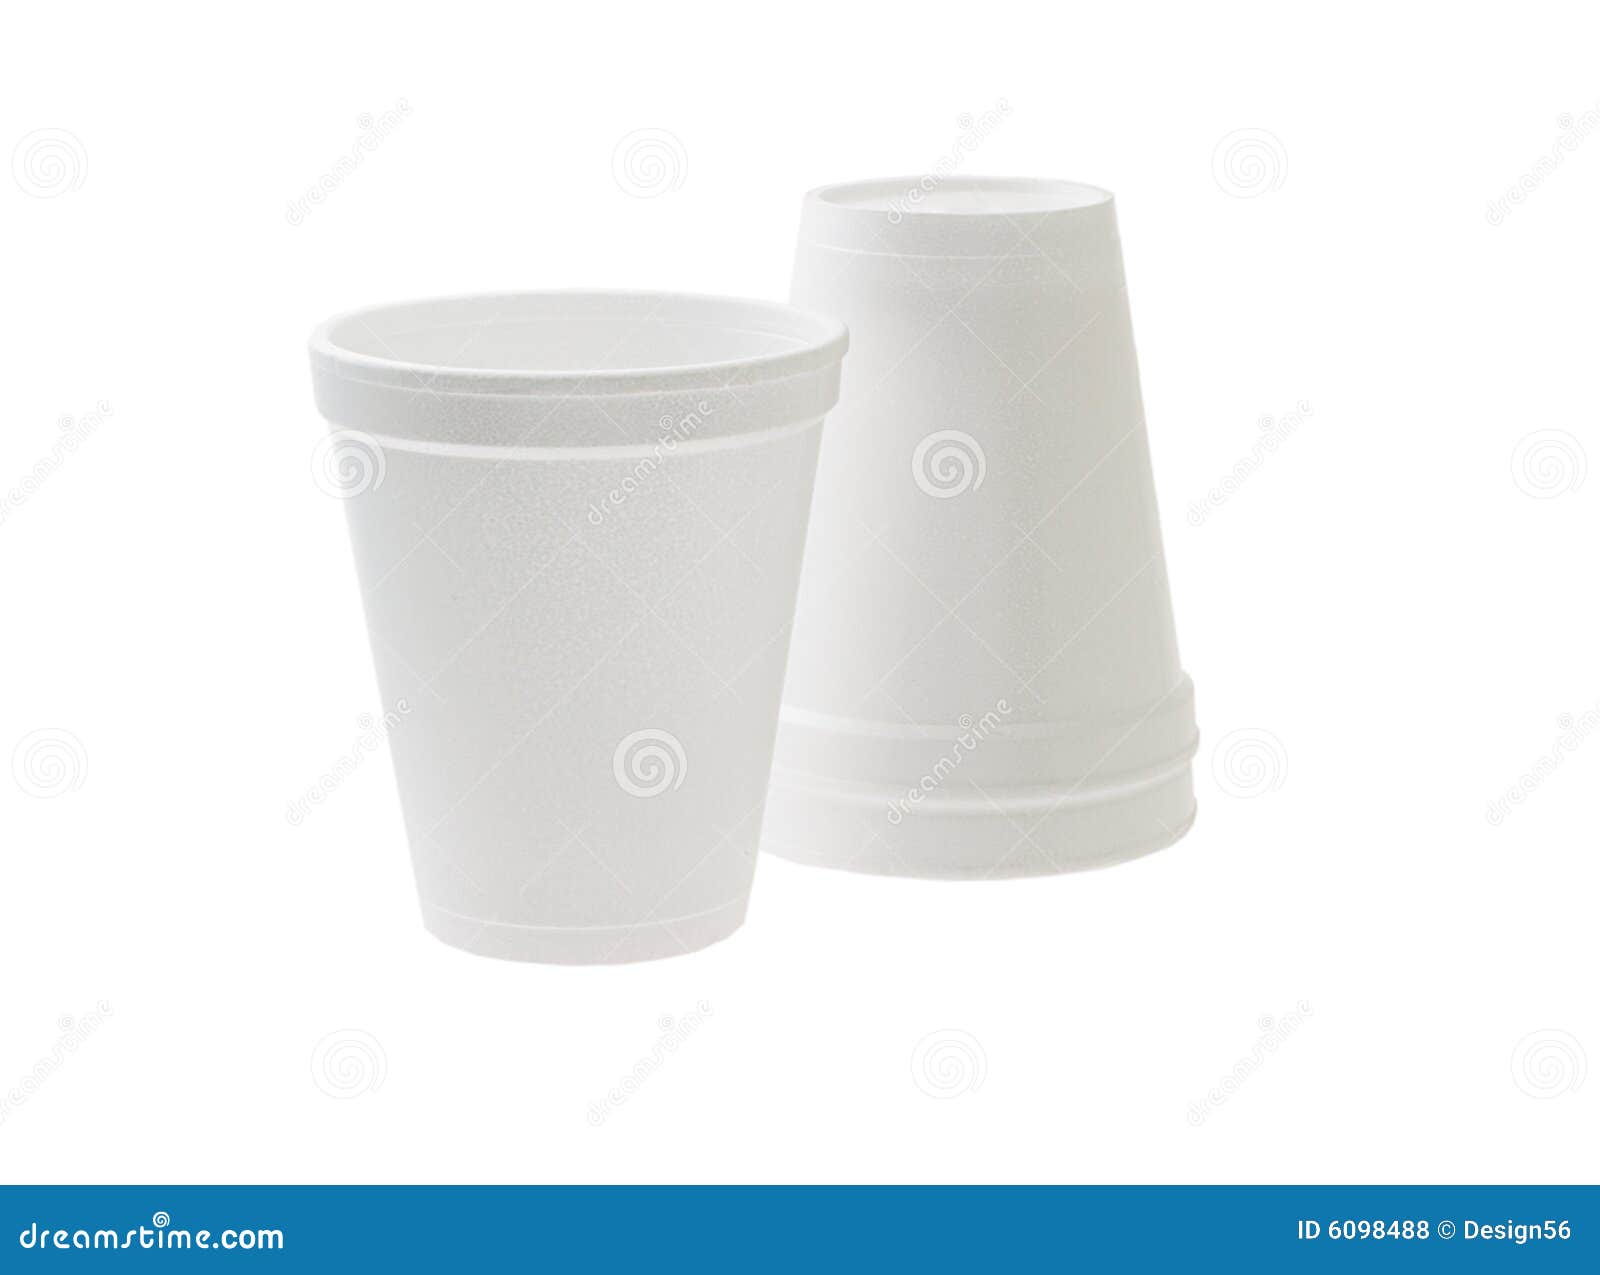 clip art styrofoam cup - photo #45